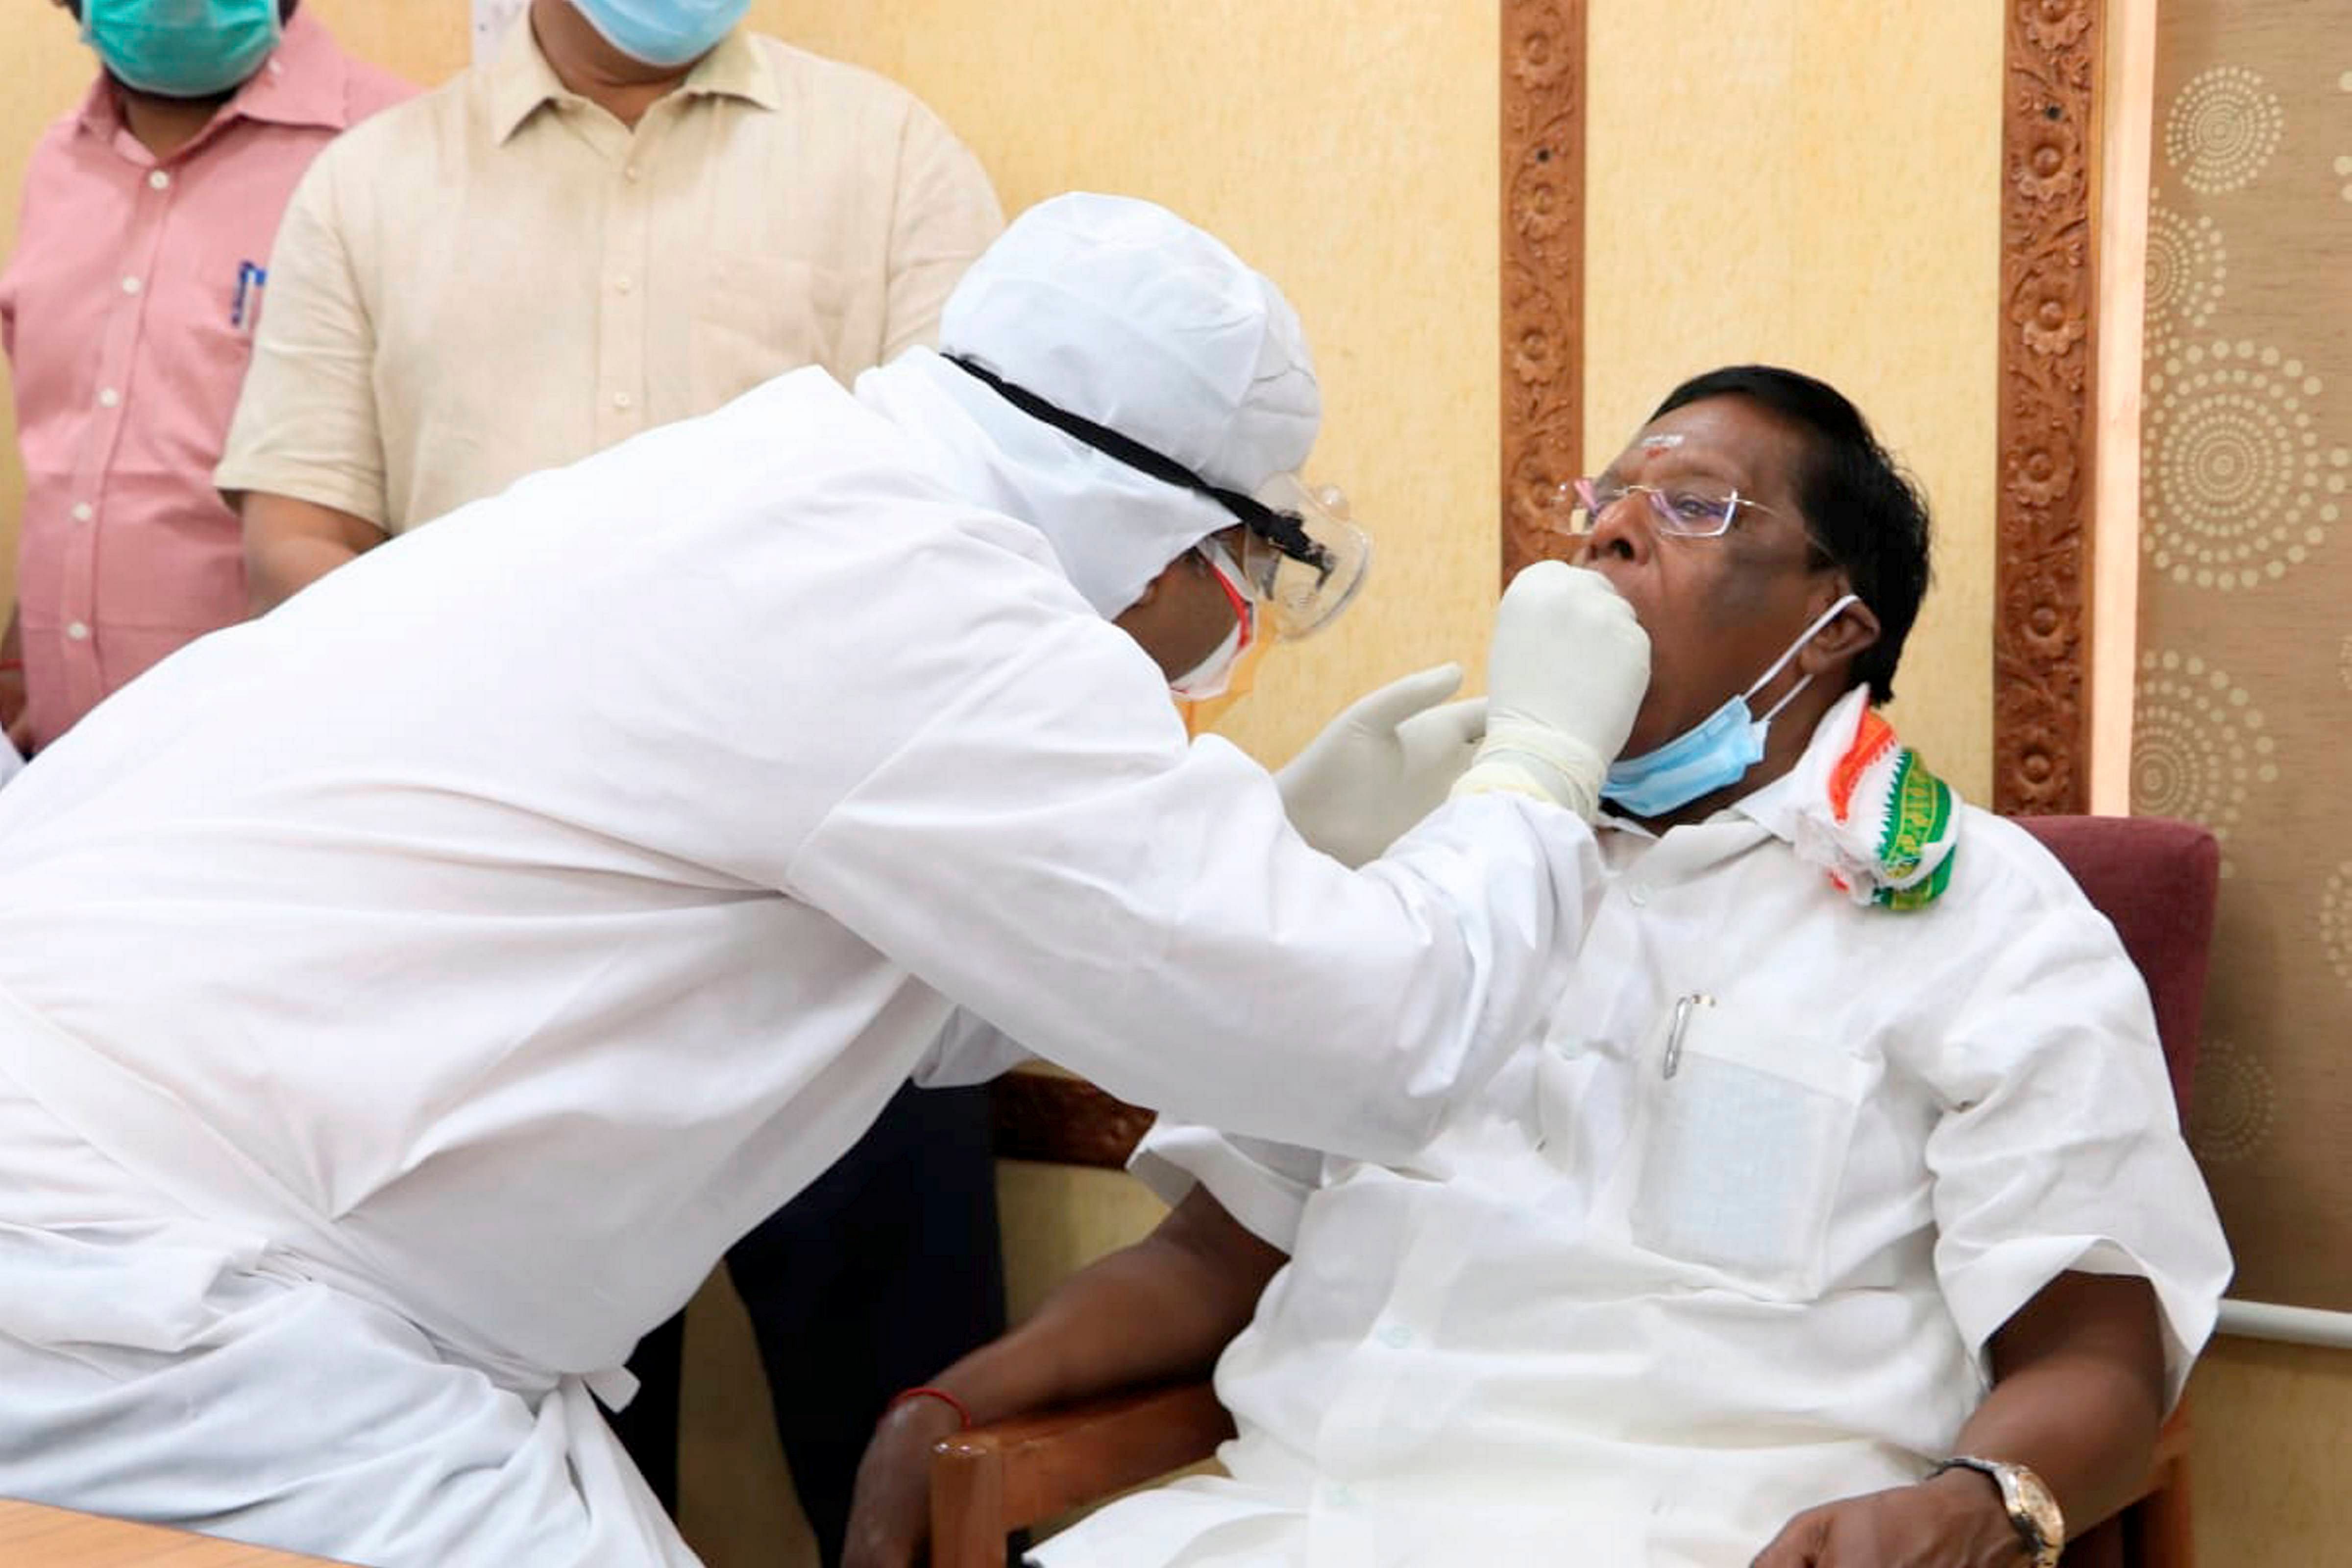 Puducherry Chief Minister V Narayanasamy gives swab sample to a medic for COVID-19 test. (Credit: PTI Photo)